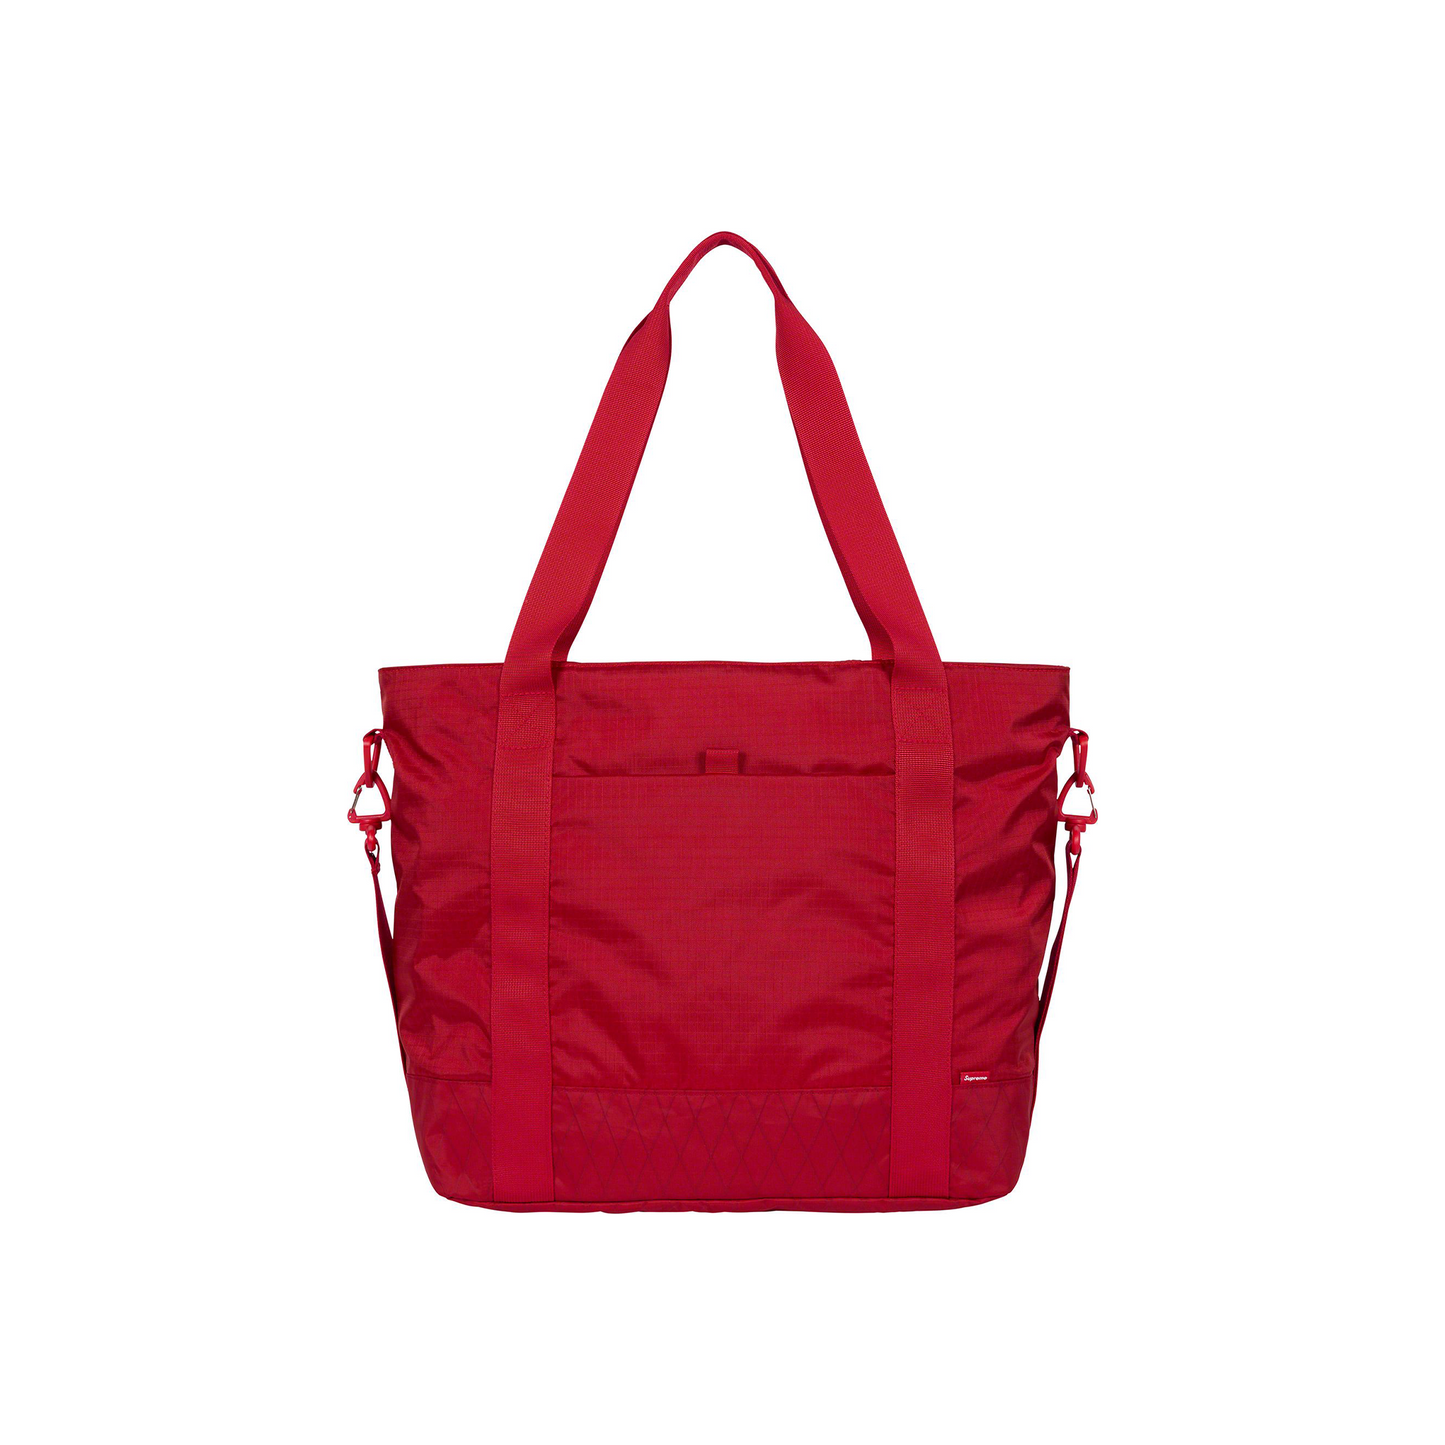 Supreme Tote Bag Red (FW23)